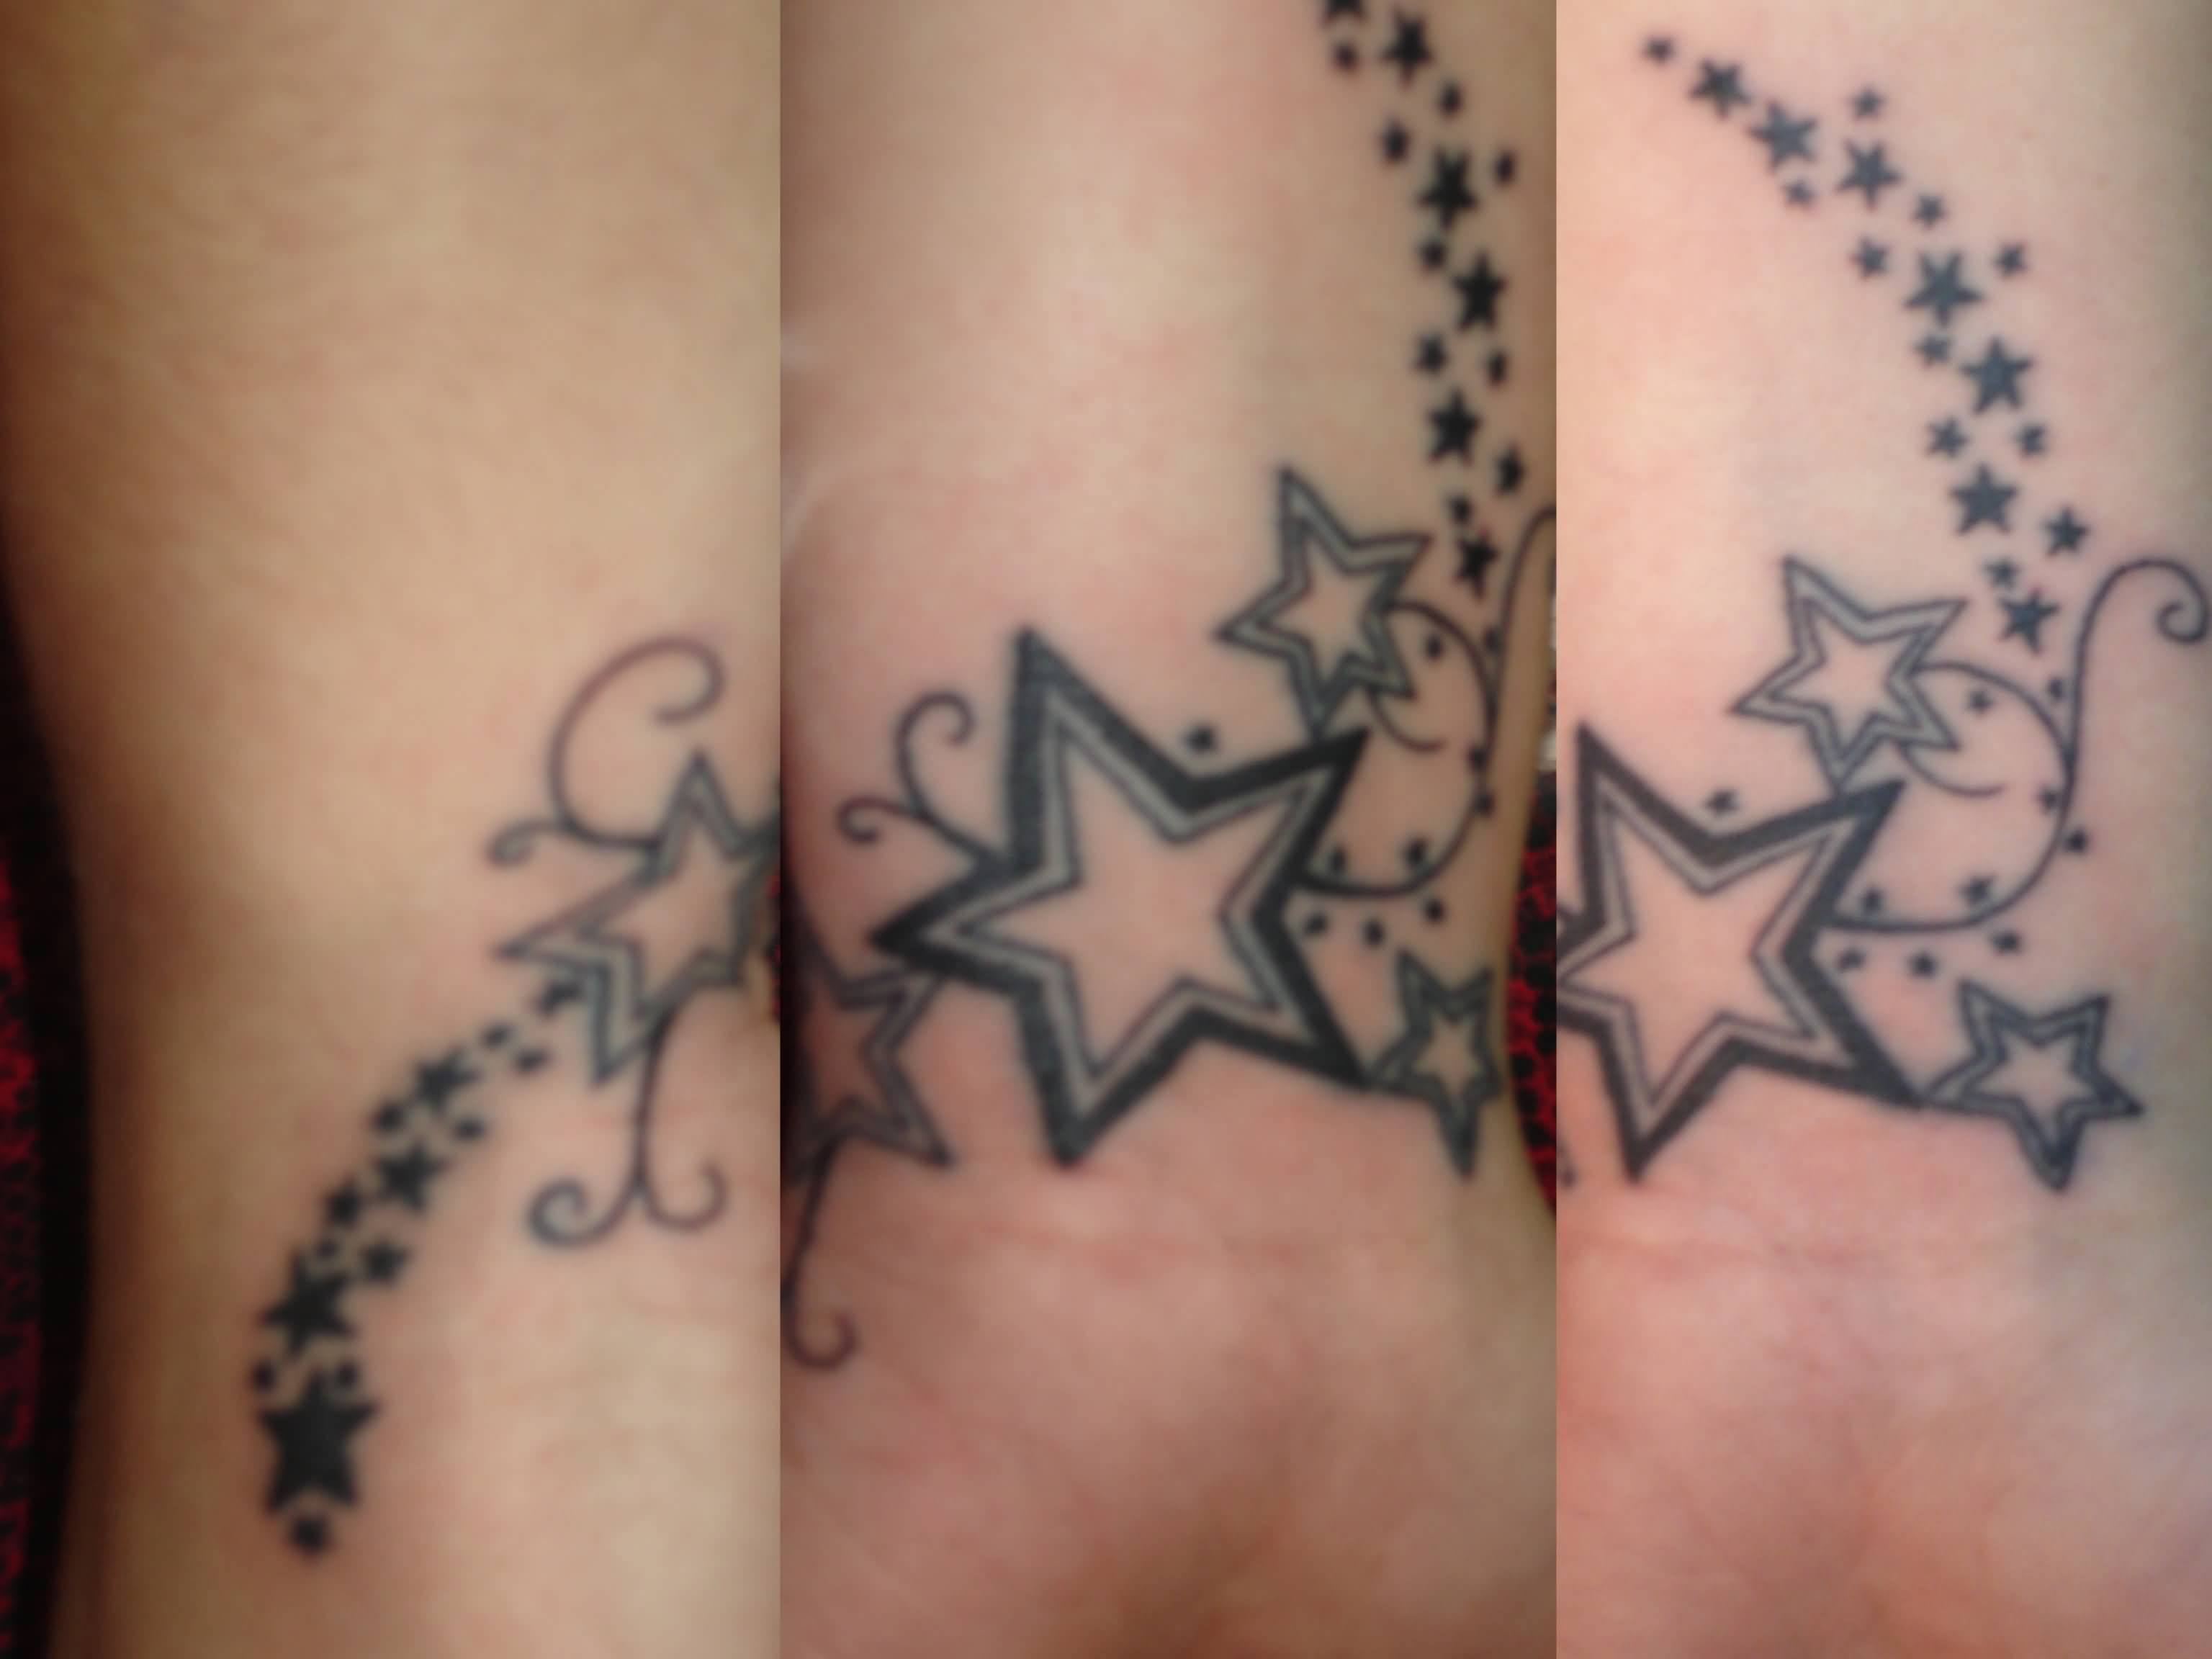 Amazing Star Wrist Tattoos